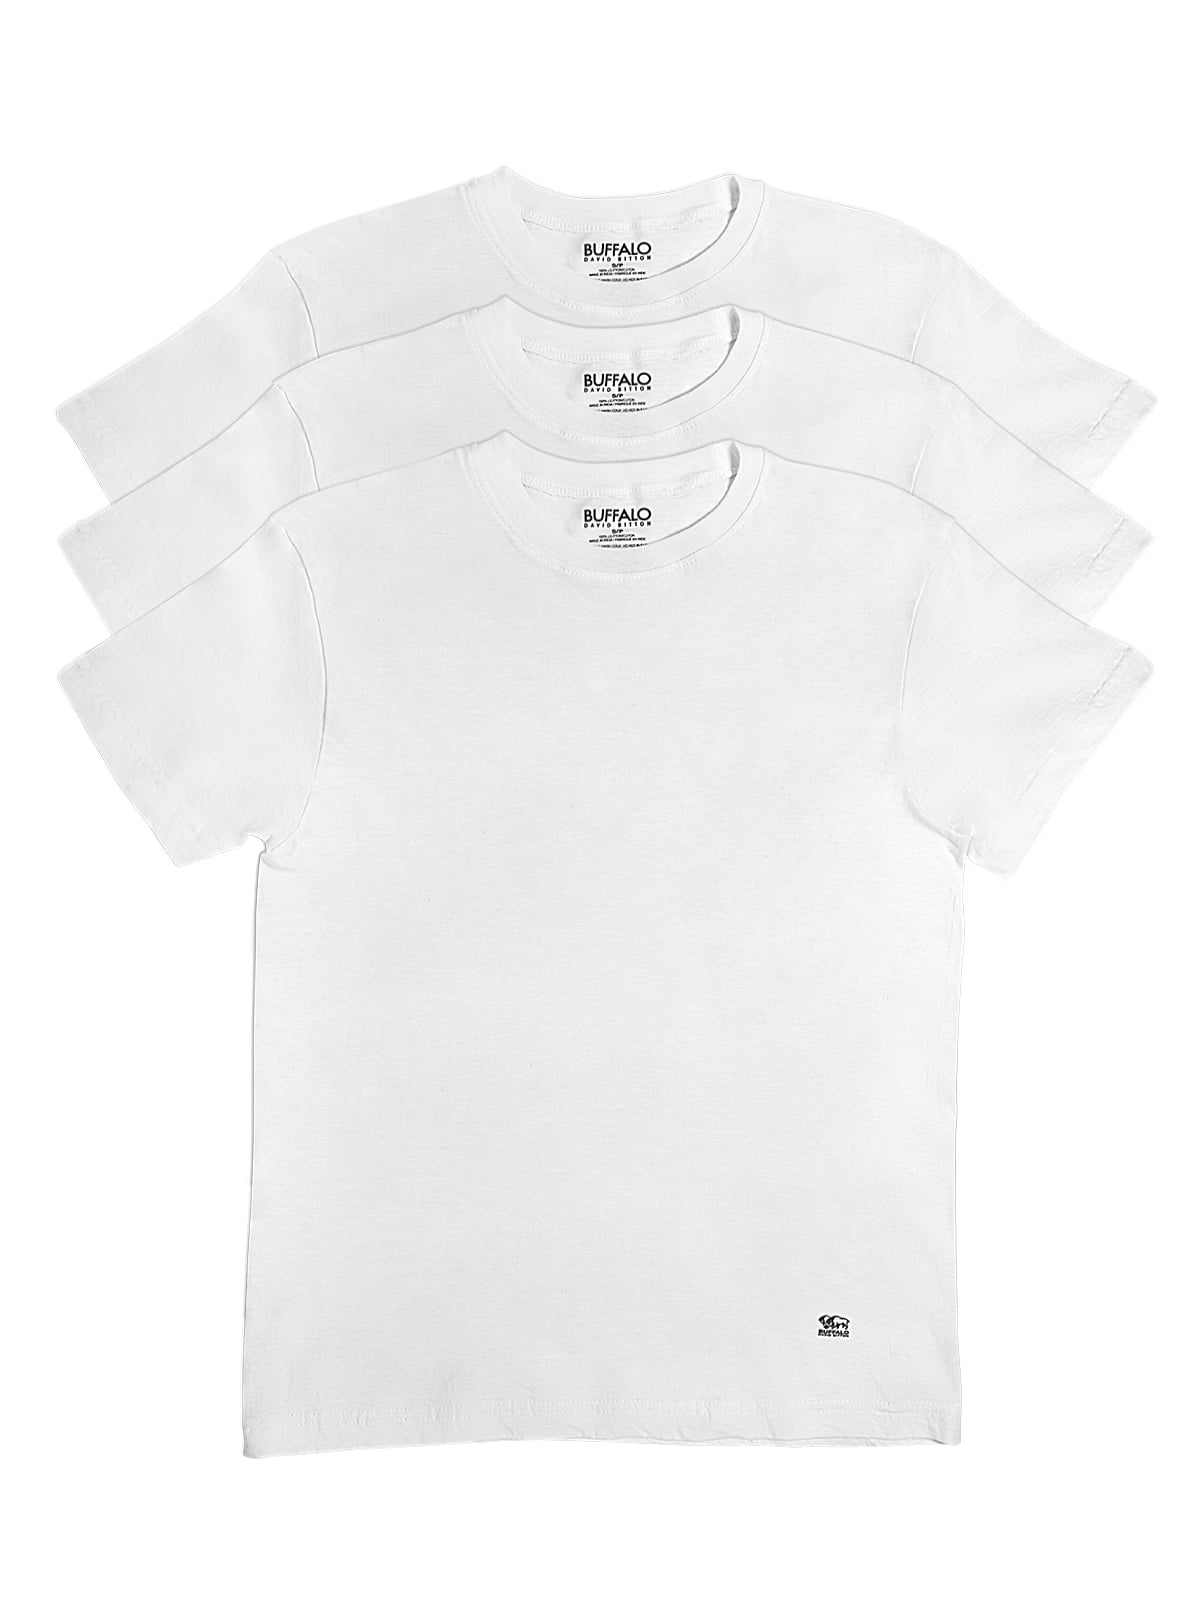 Neck | Crew | Bitton Cotton Medium) David 100% | T-Shirt Buffalo Men\'s Tagless 3-Pack White (White,